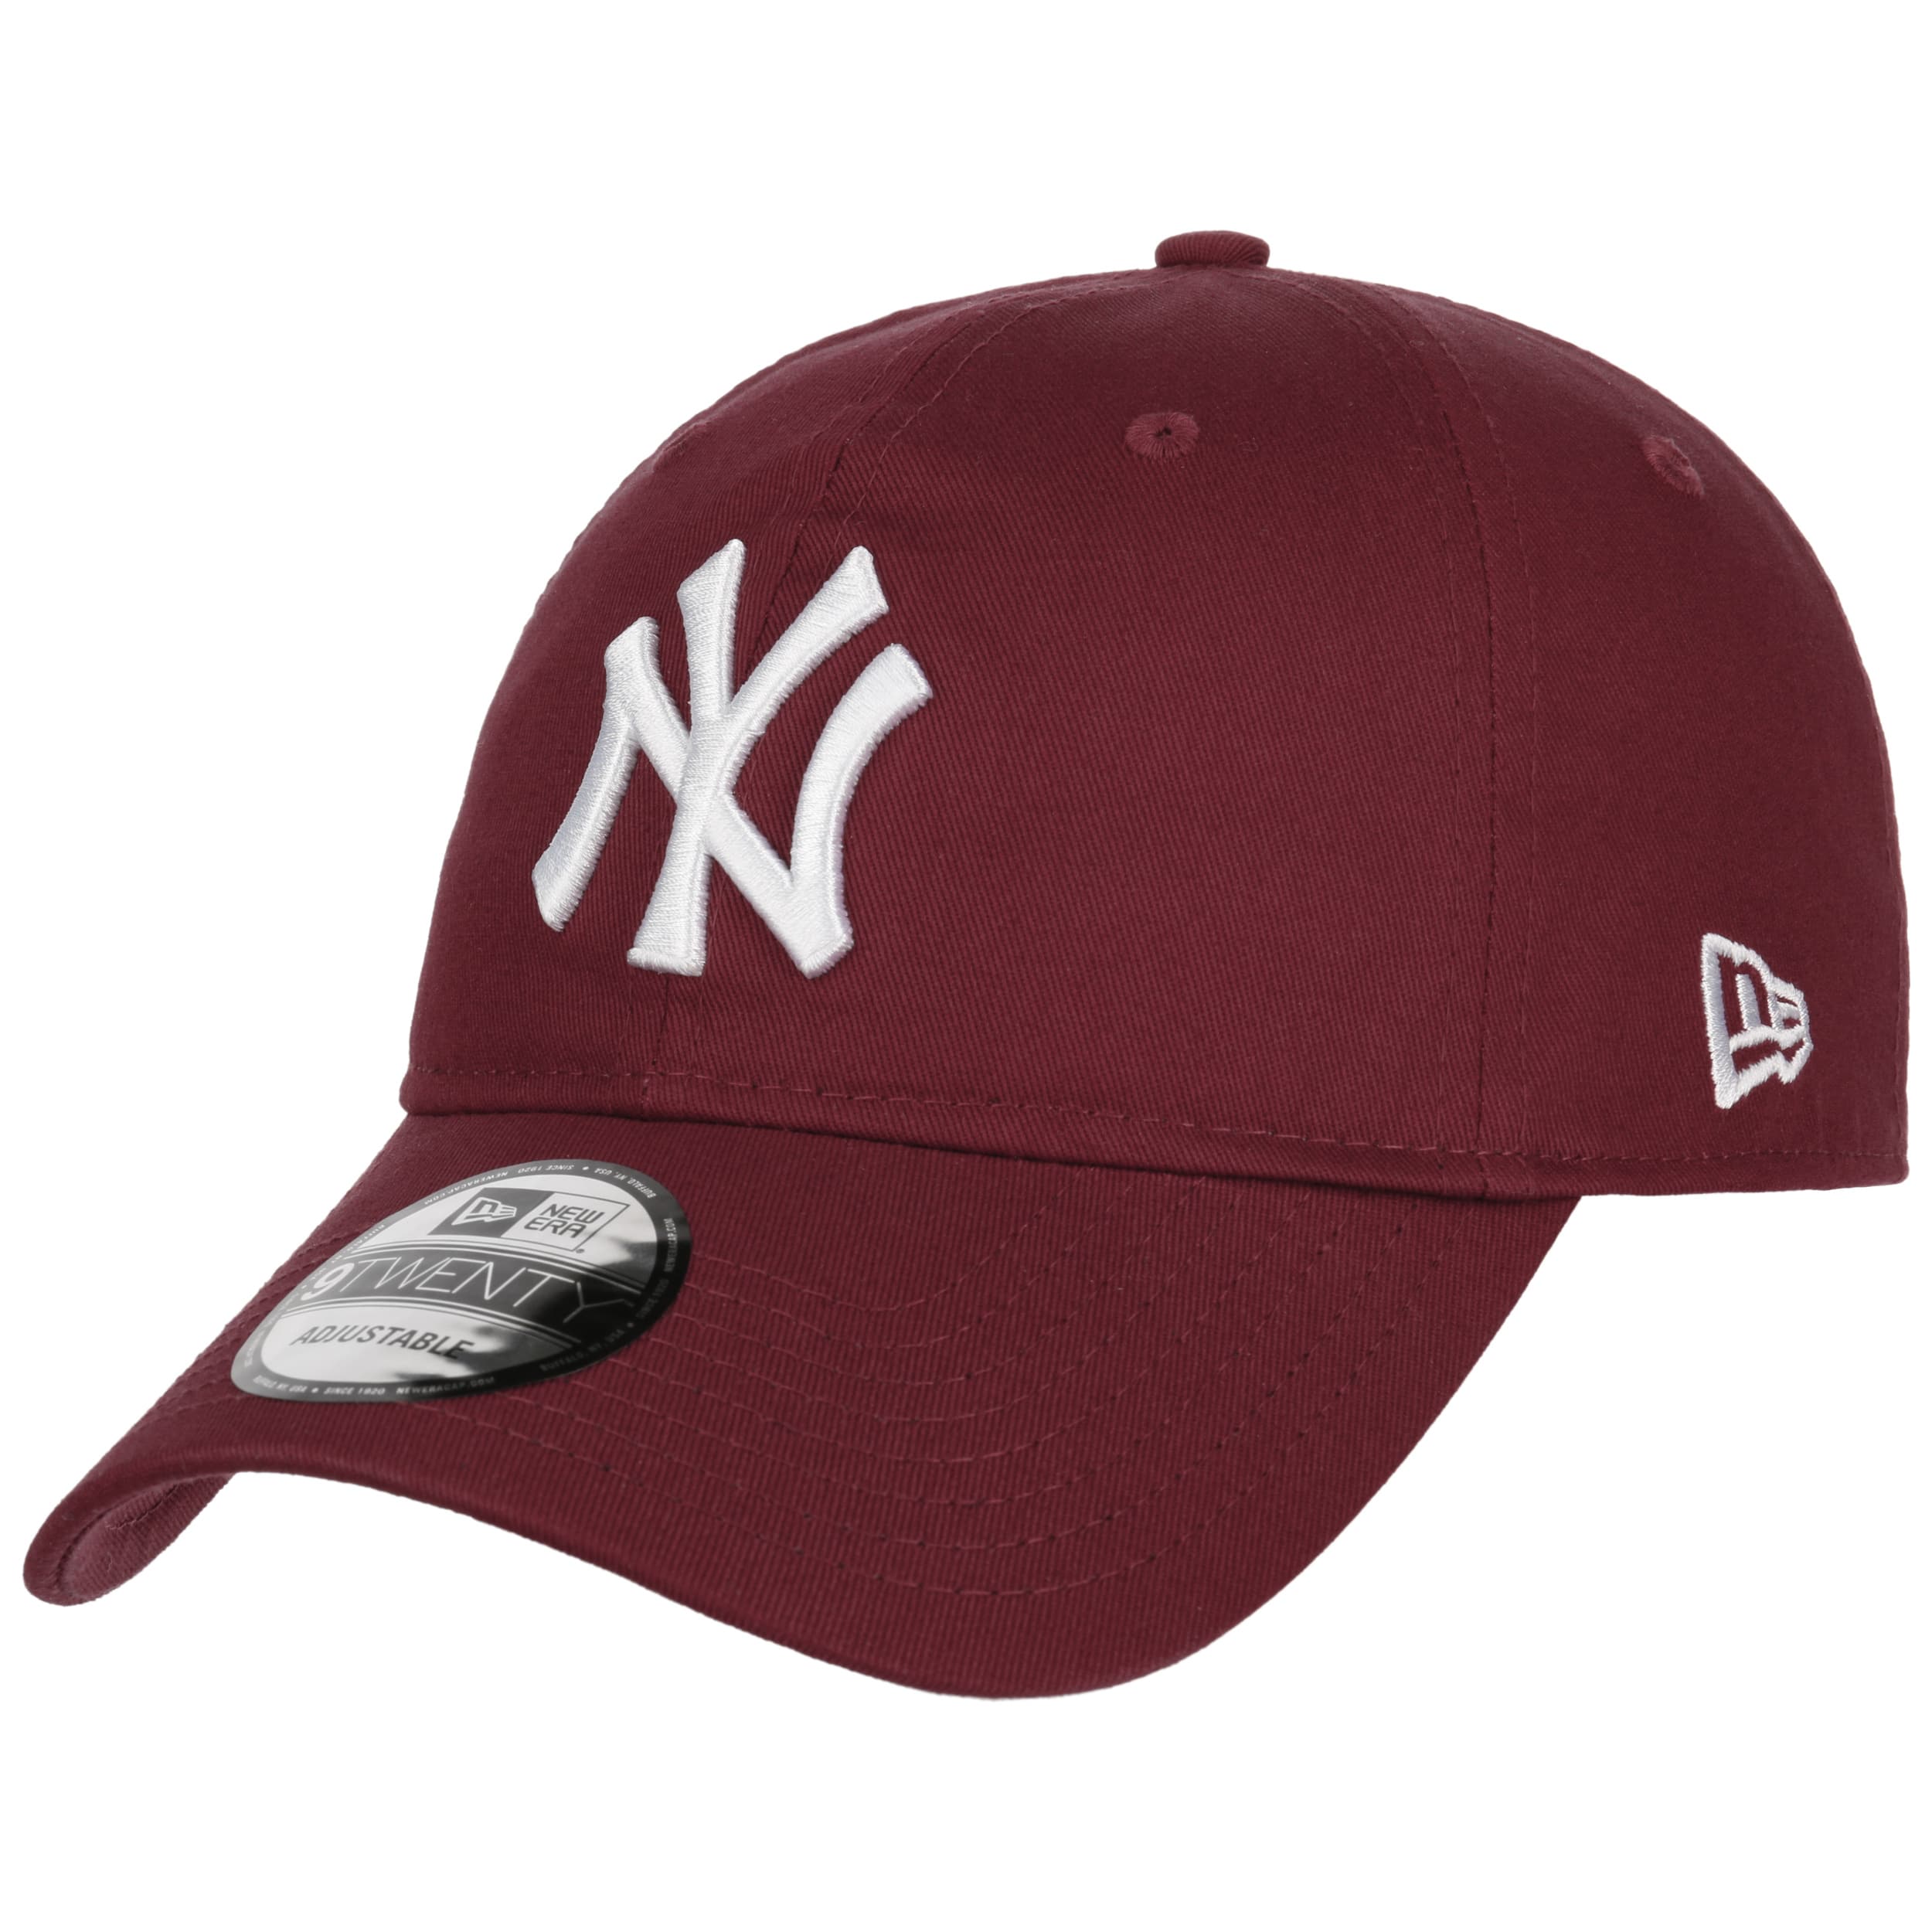 La casquette baseball NY 9Twenty, New Era, Casquettes pour Femme